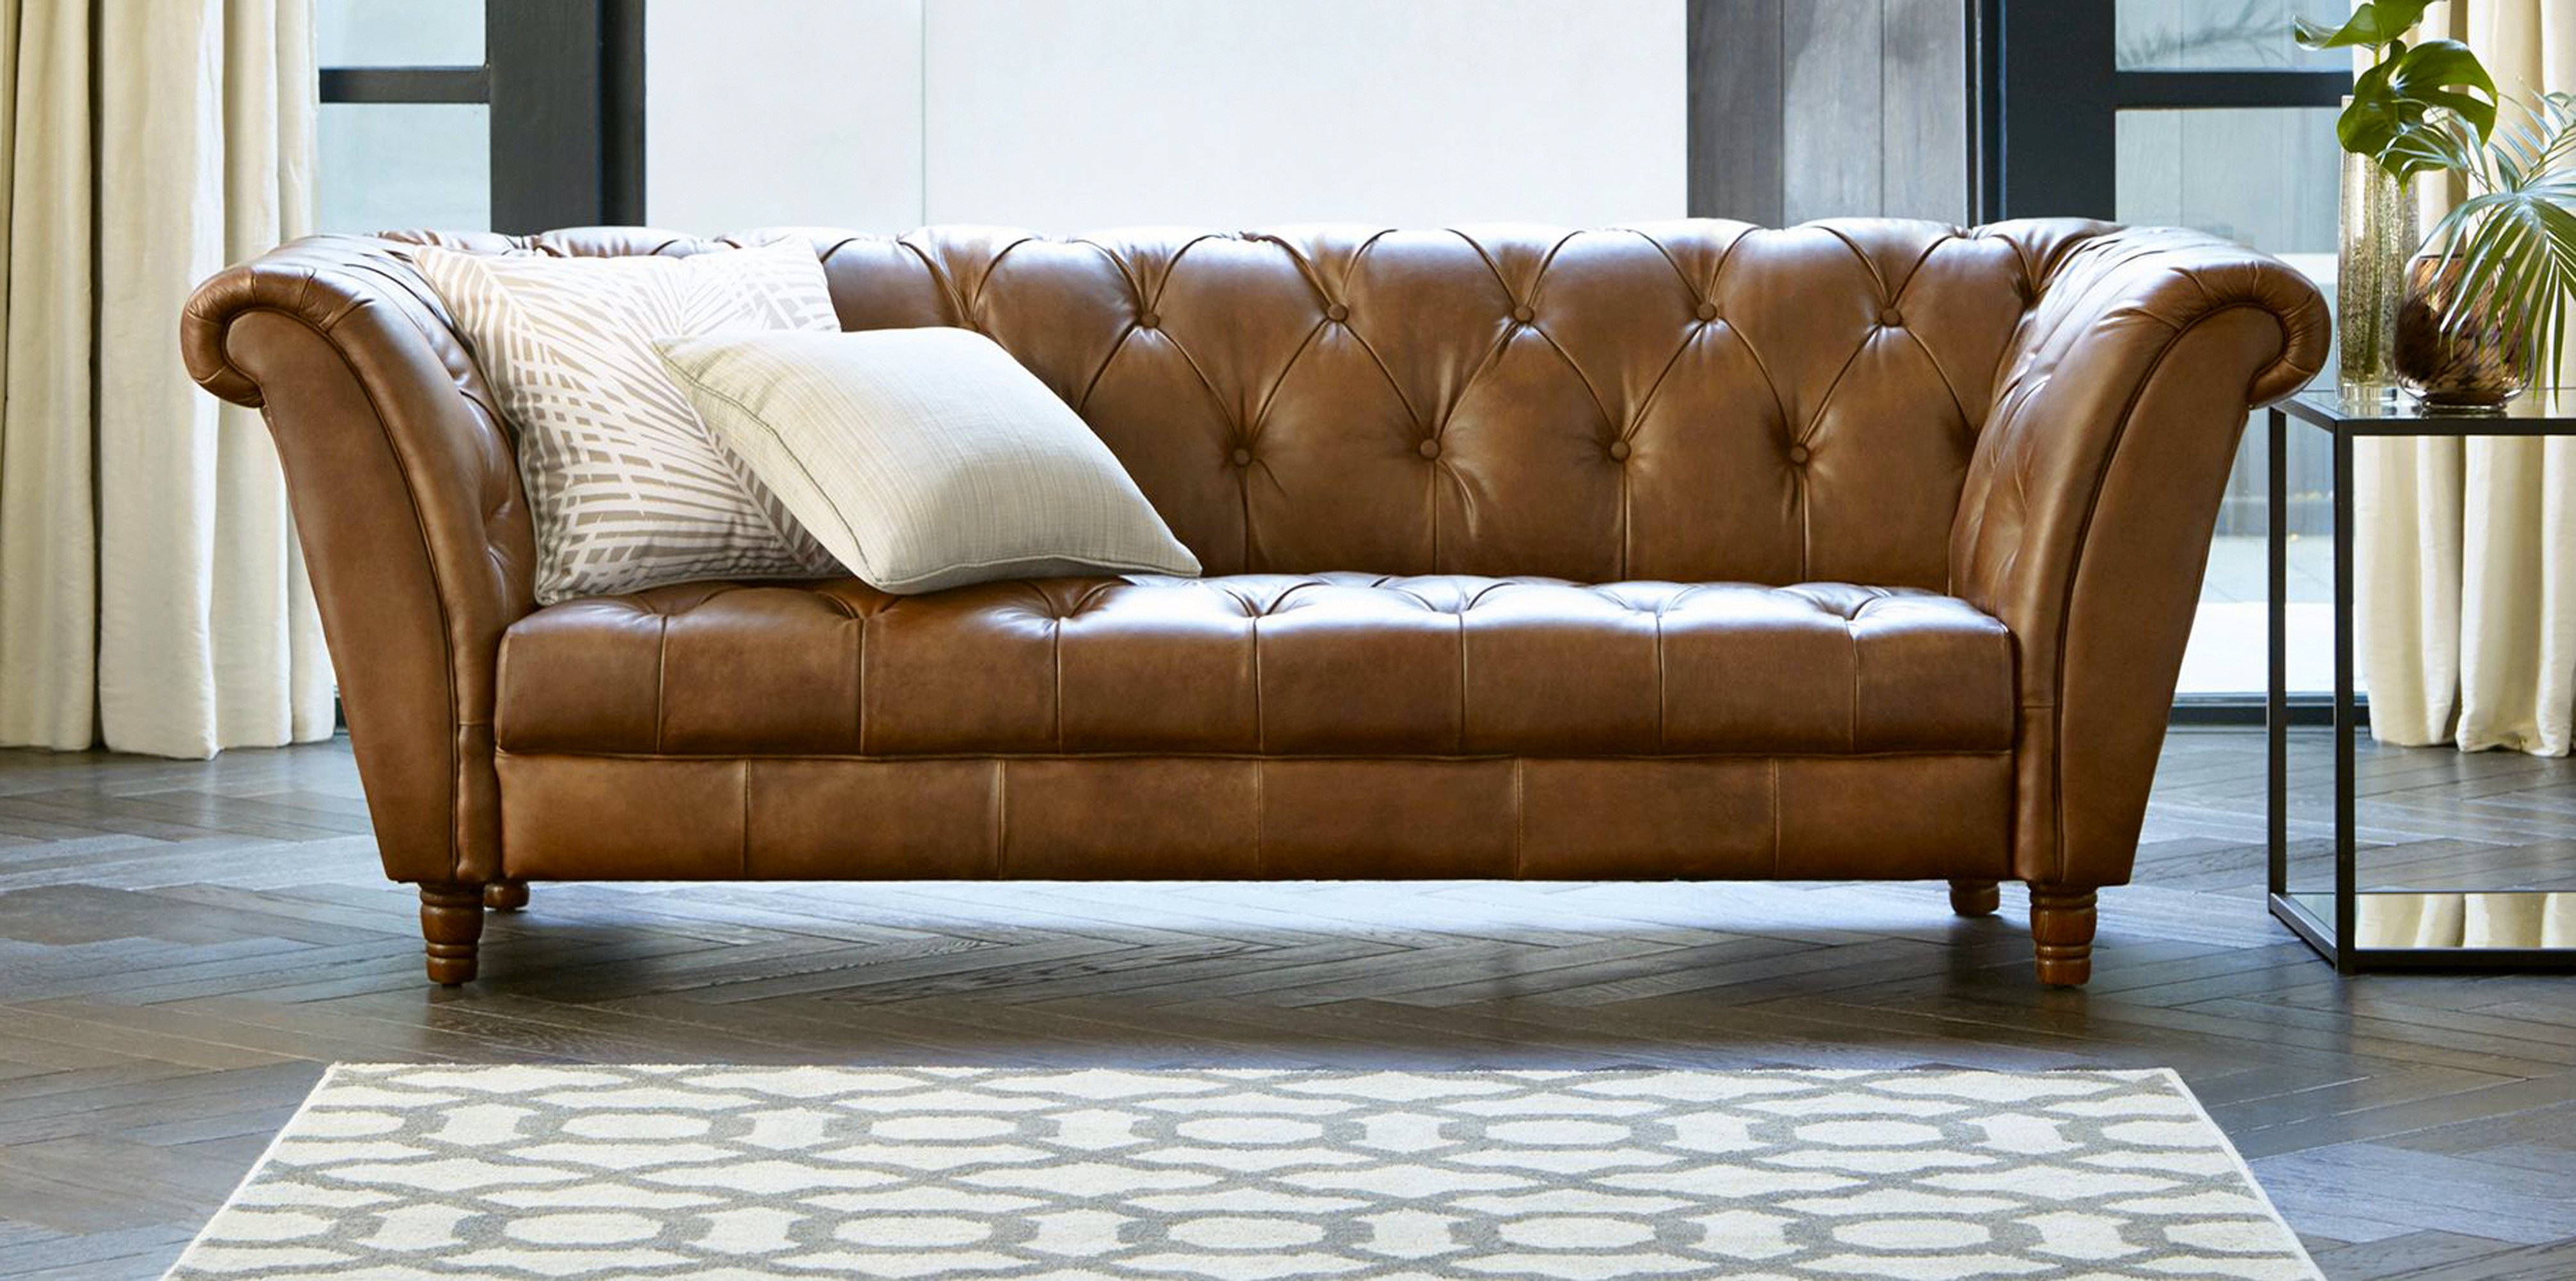 leather sofa design